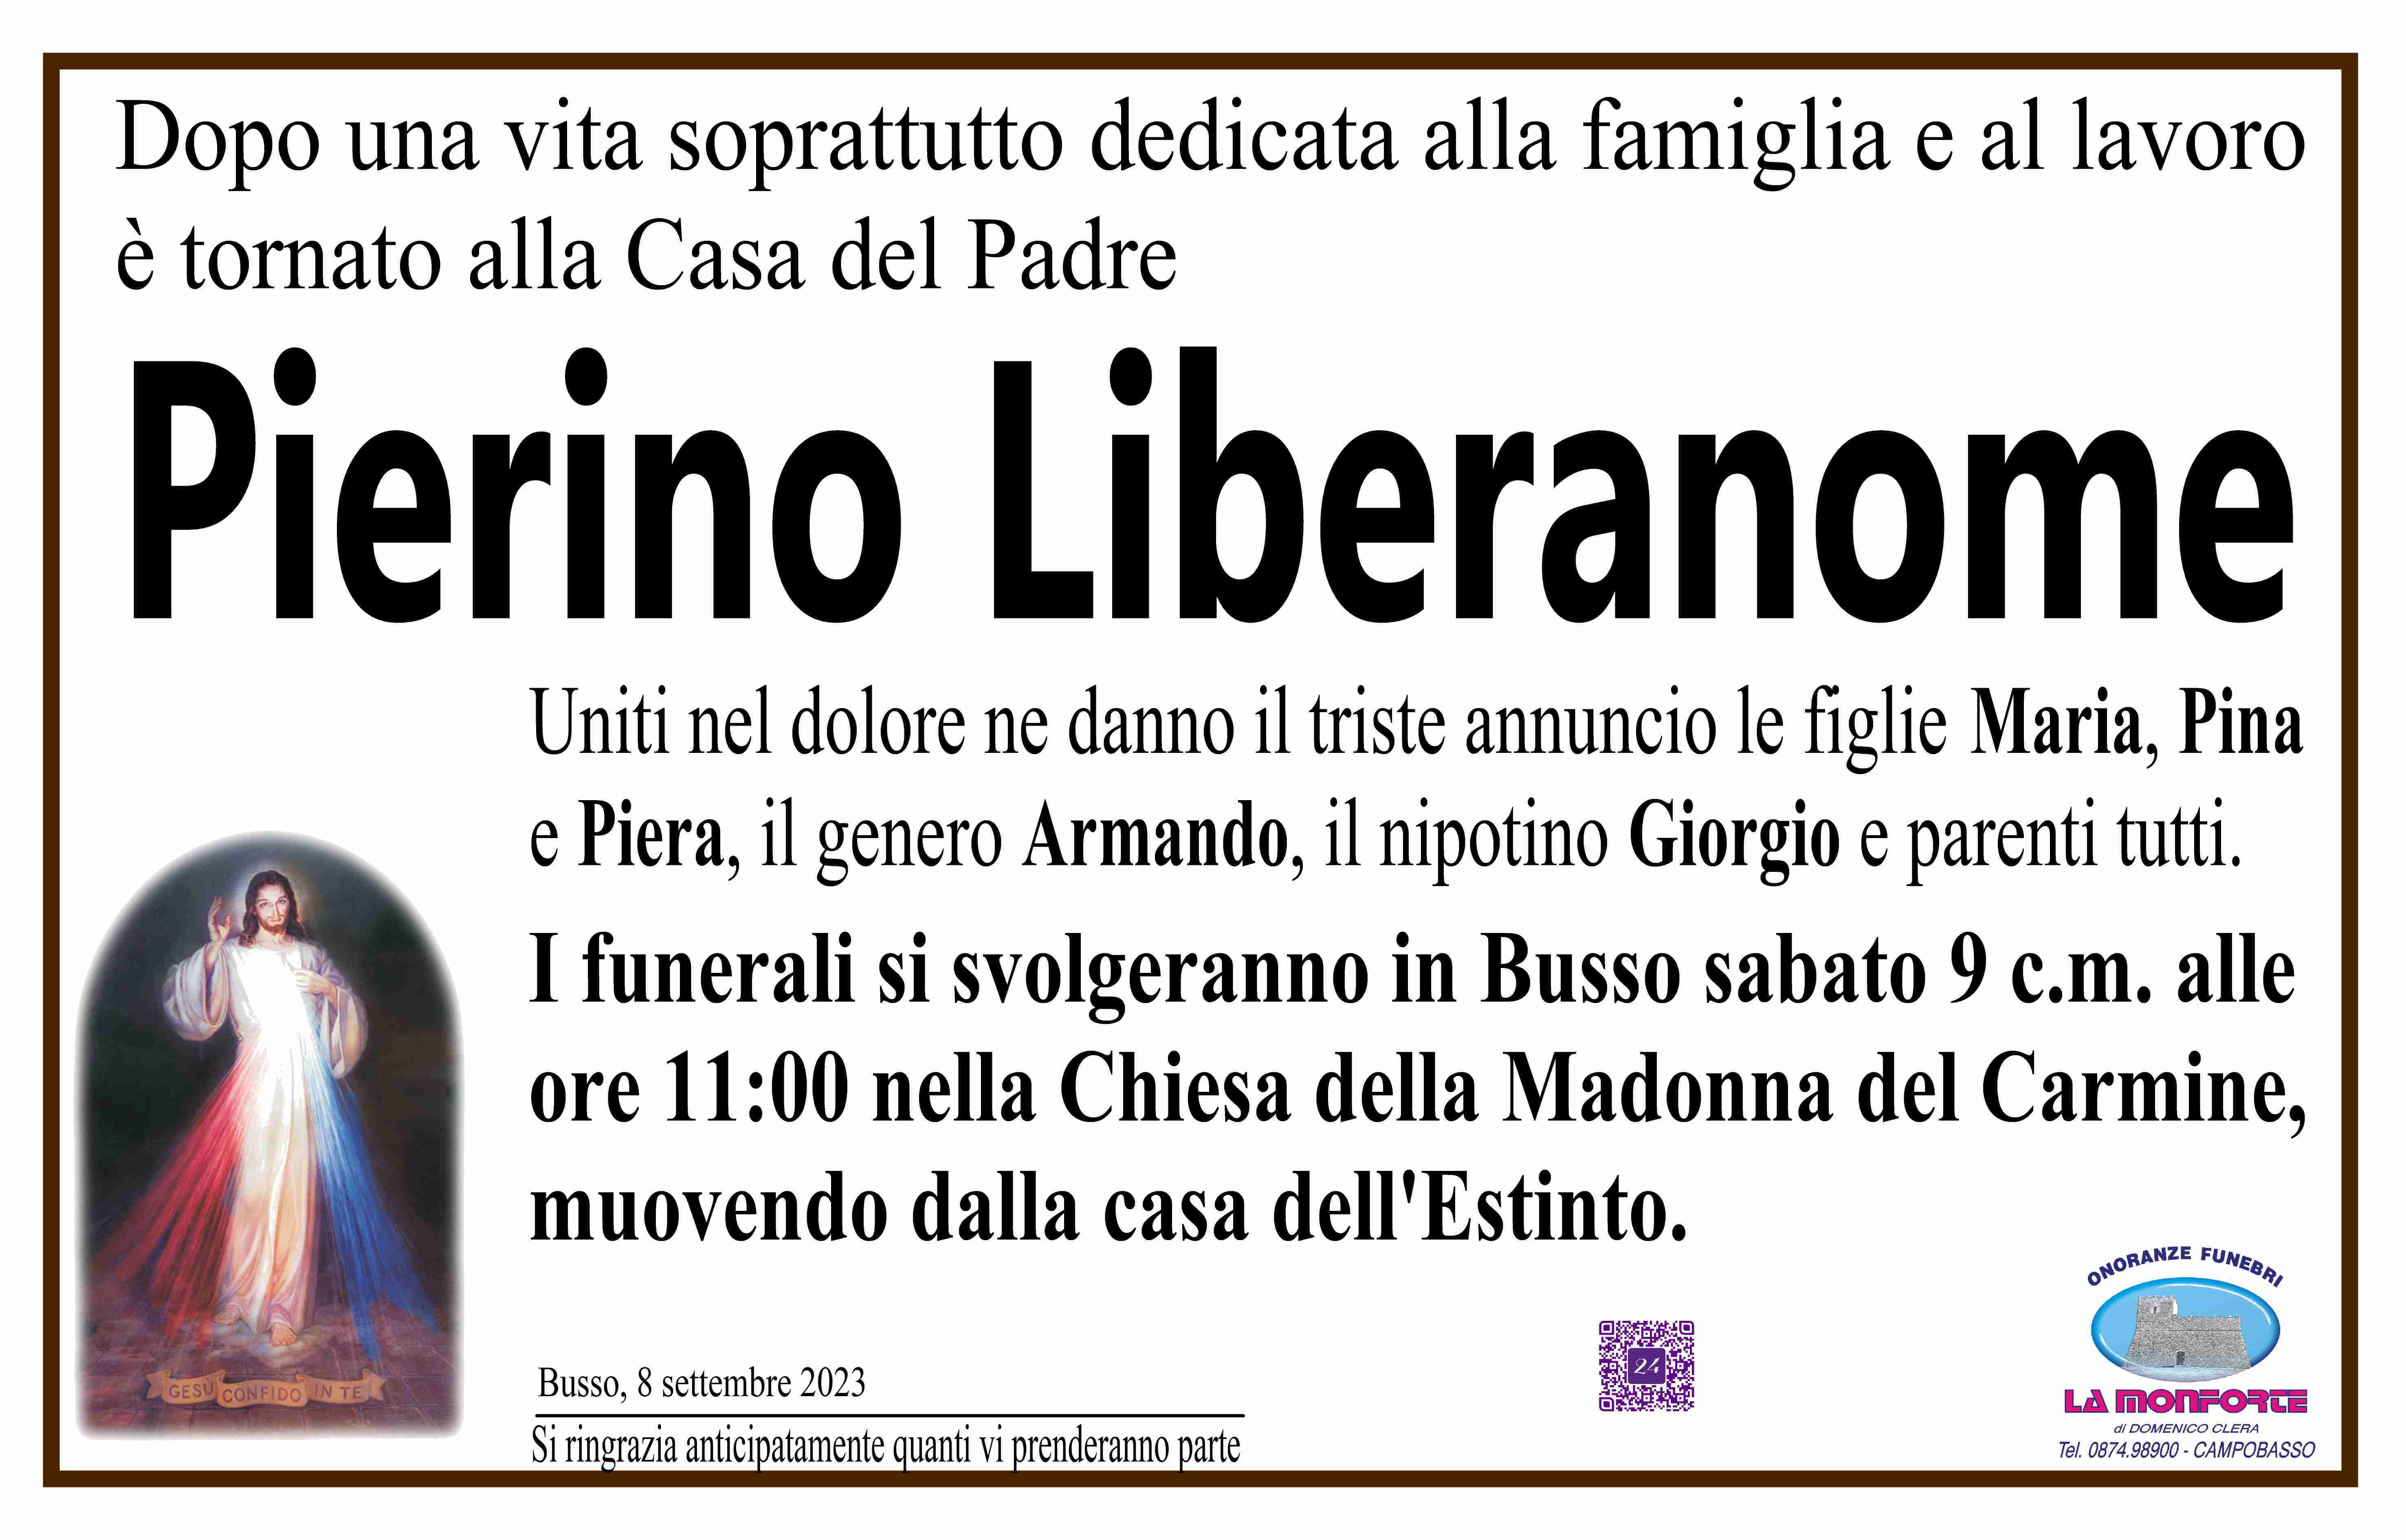 Pierino Liberanome